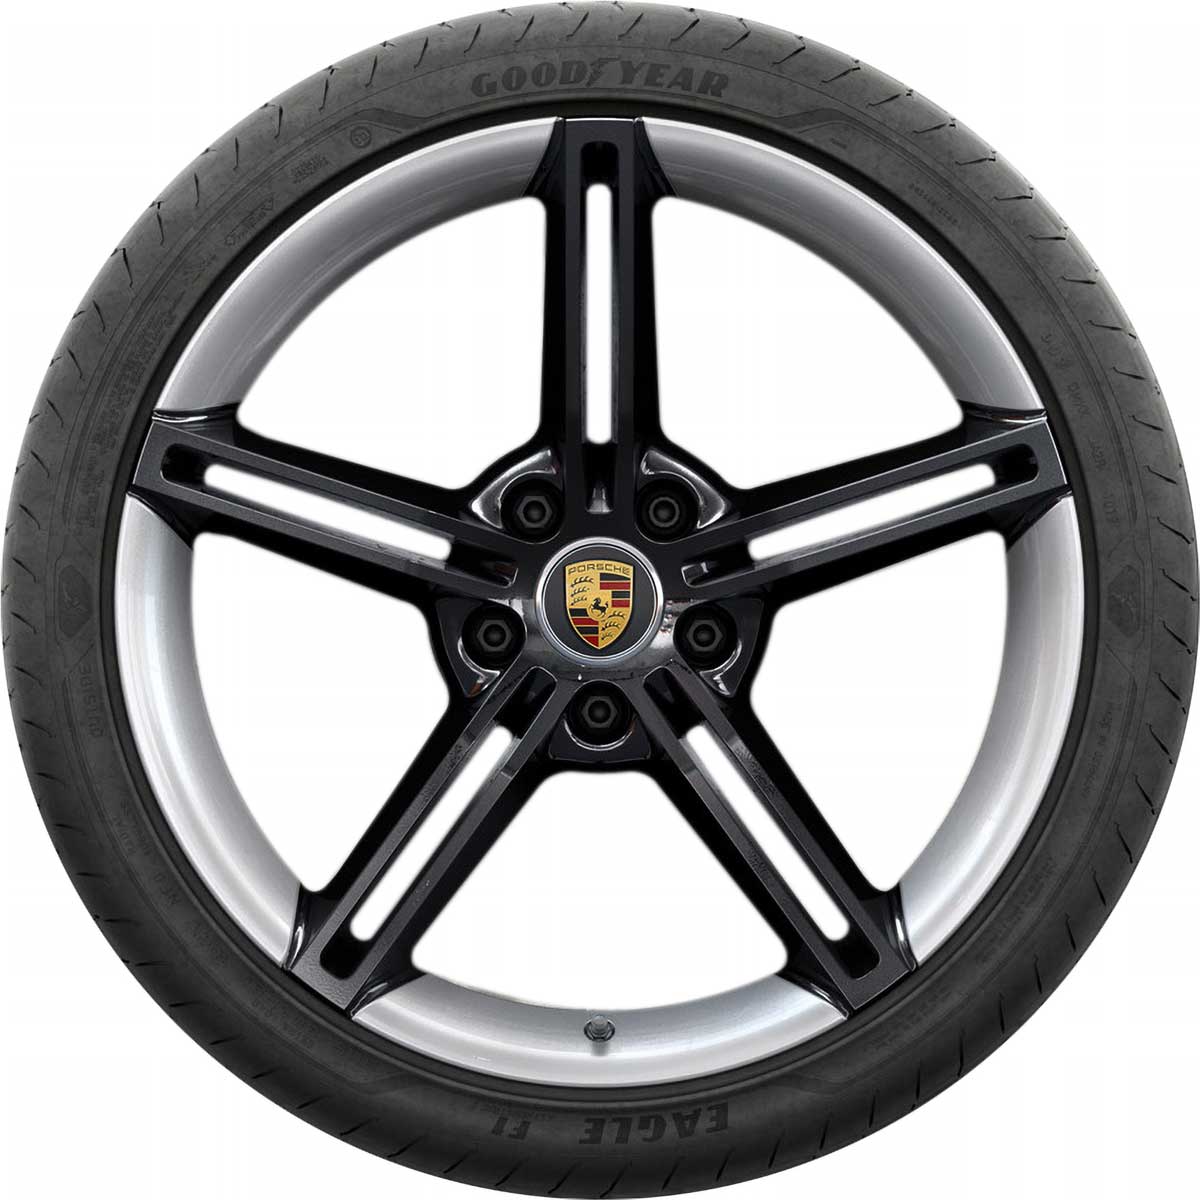 21” Porsche Taycan Mission E Design Wheel Set – CarGym